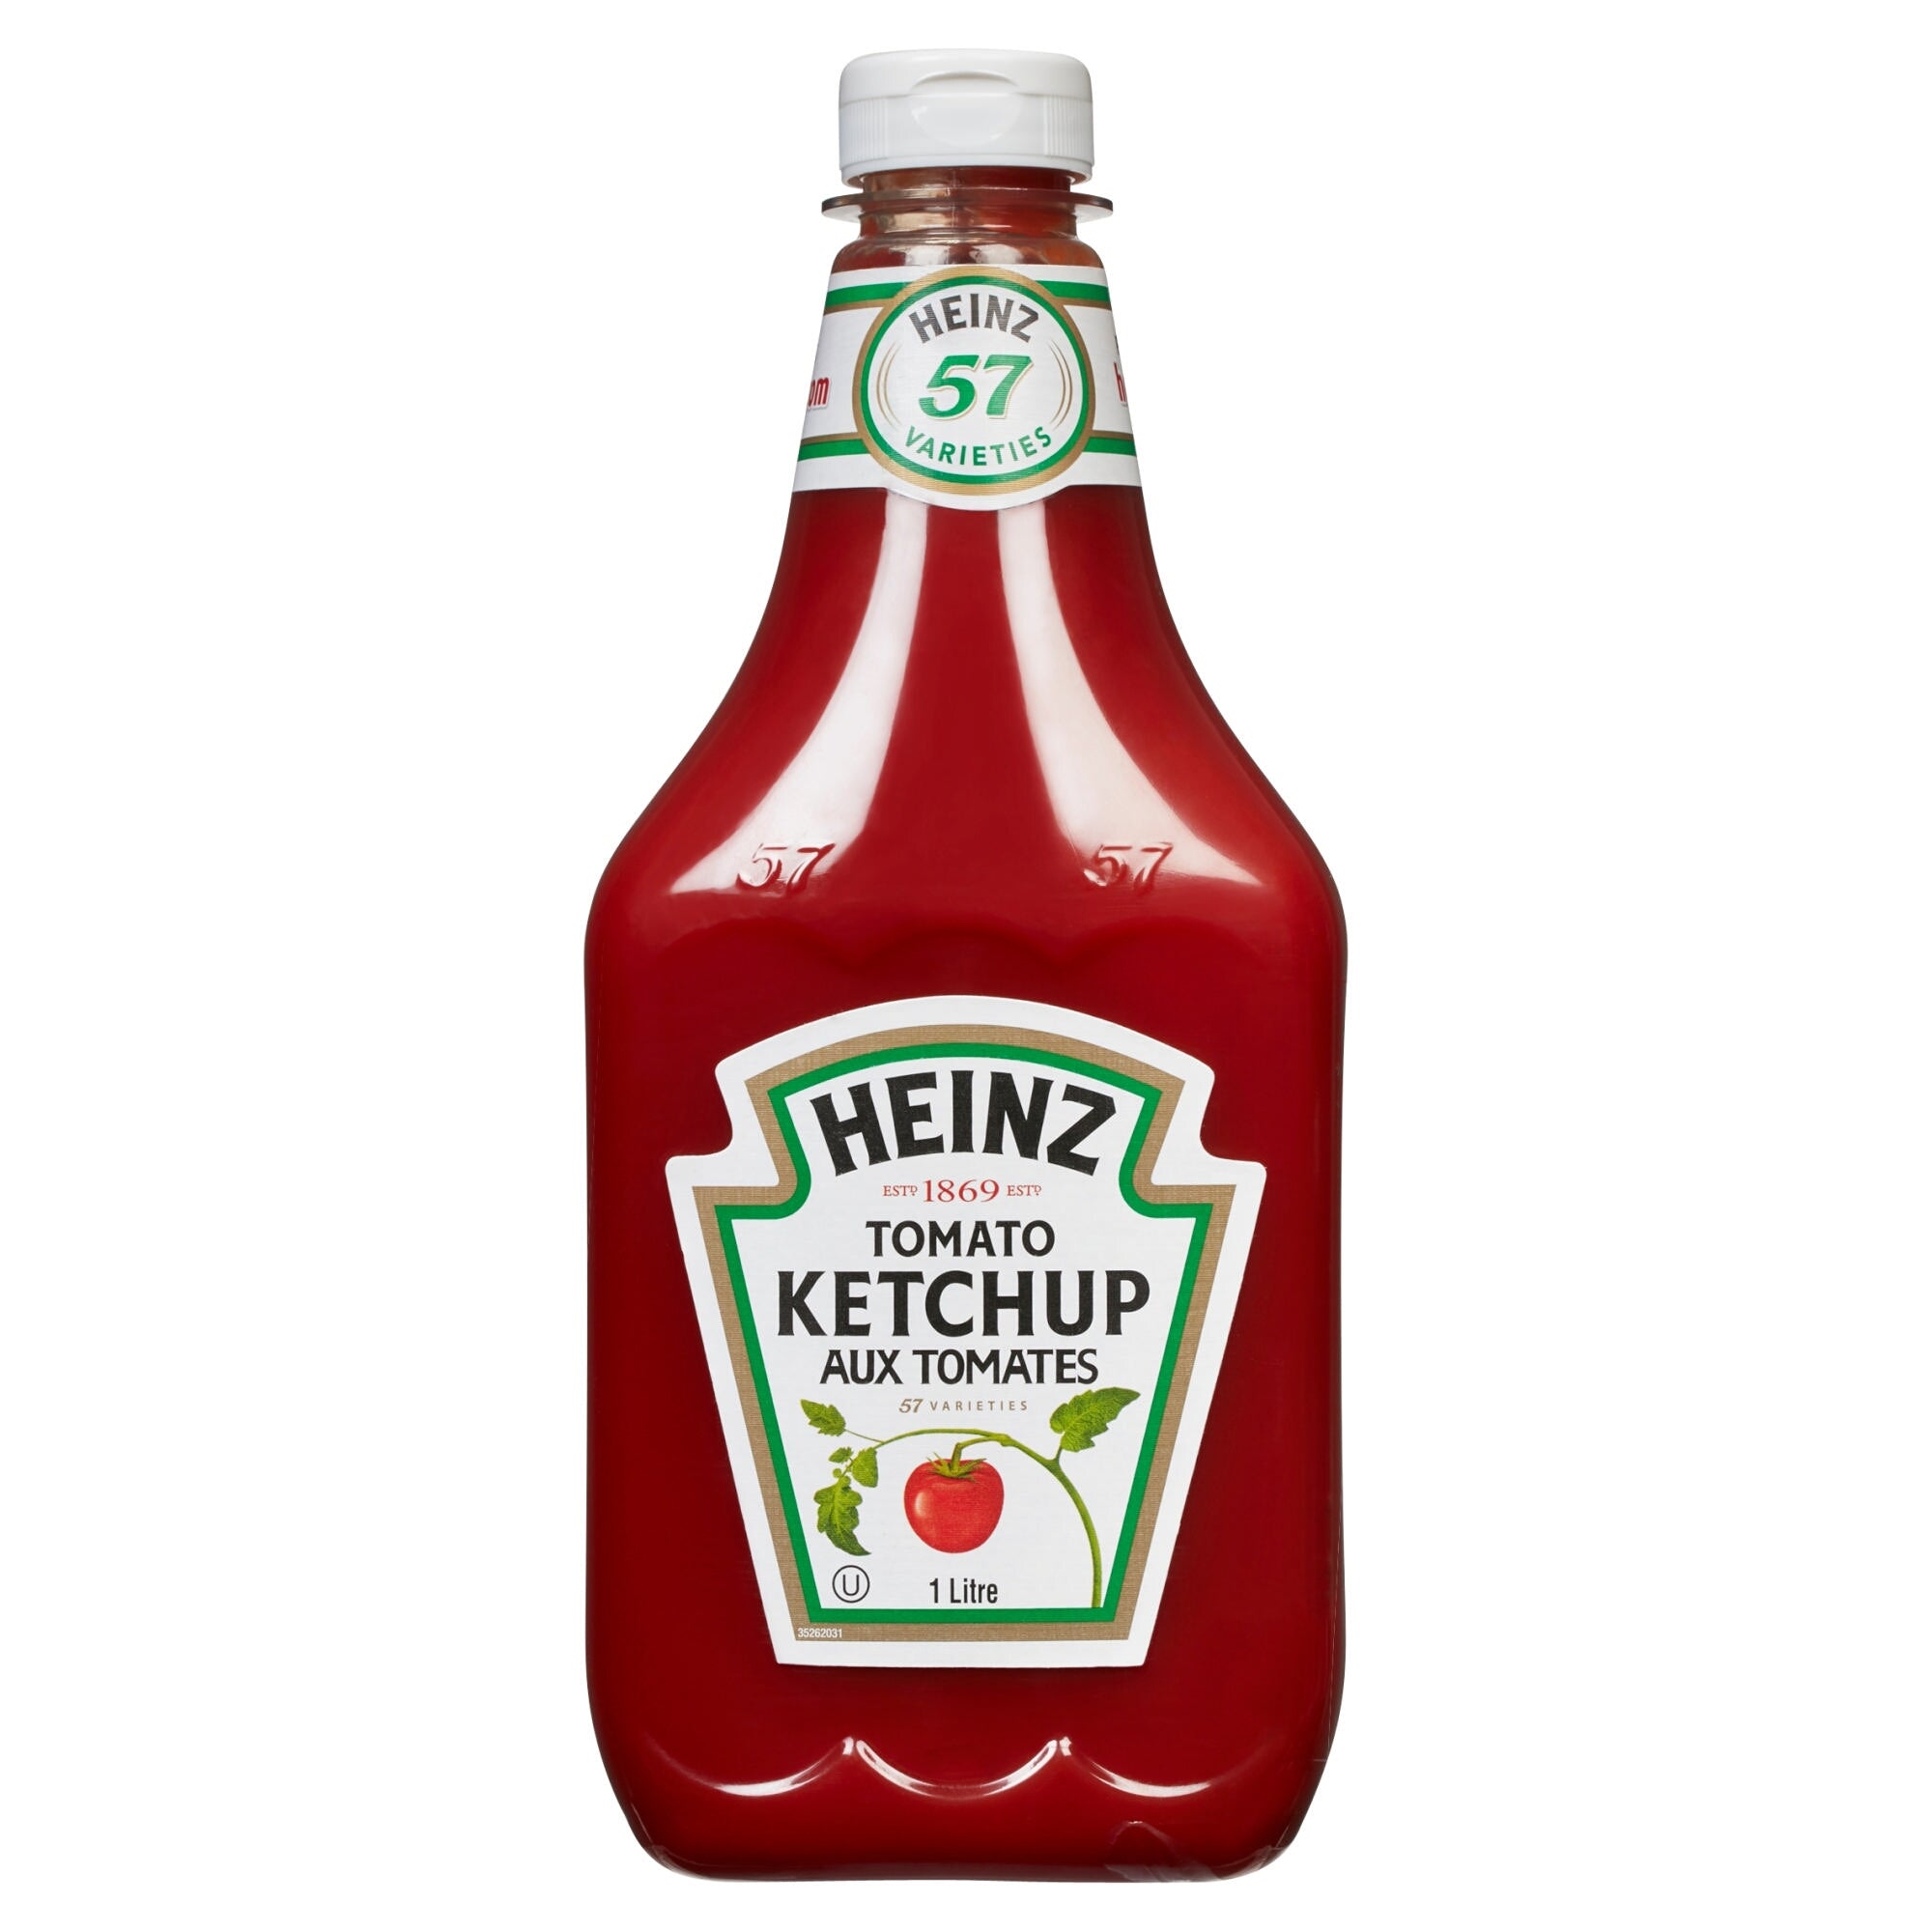 Prix bas de circulaire 5,27 $, Ketchup aux tomates  1L